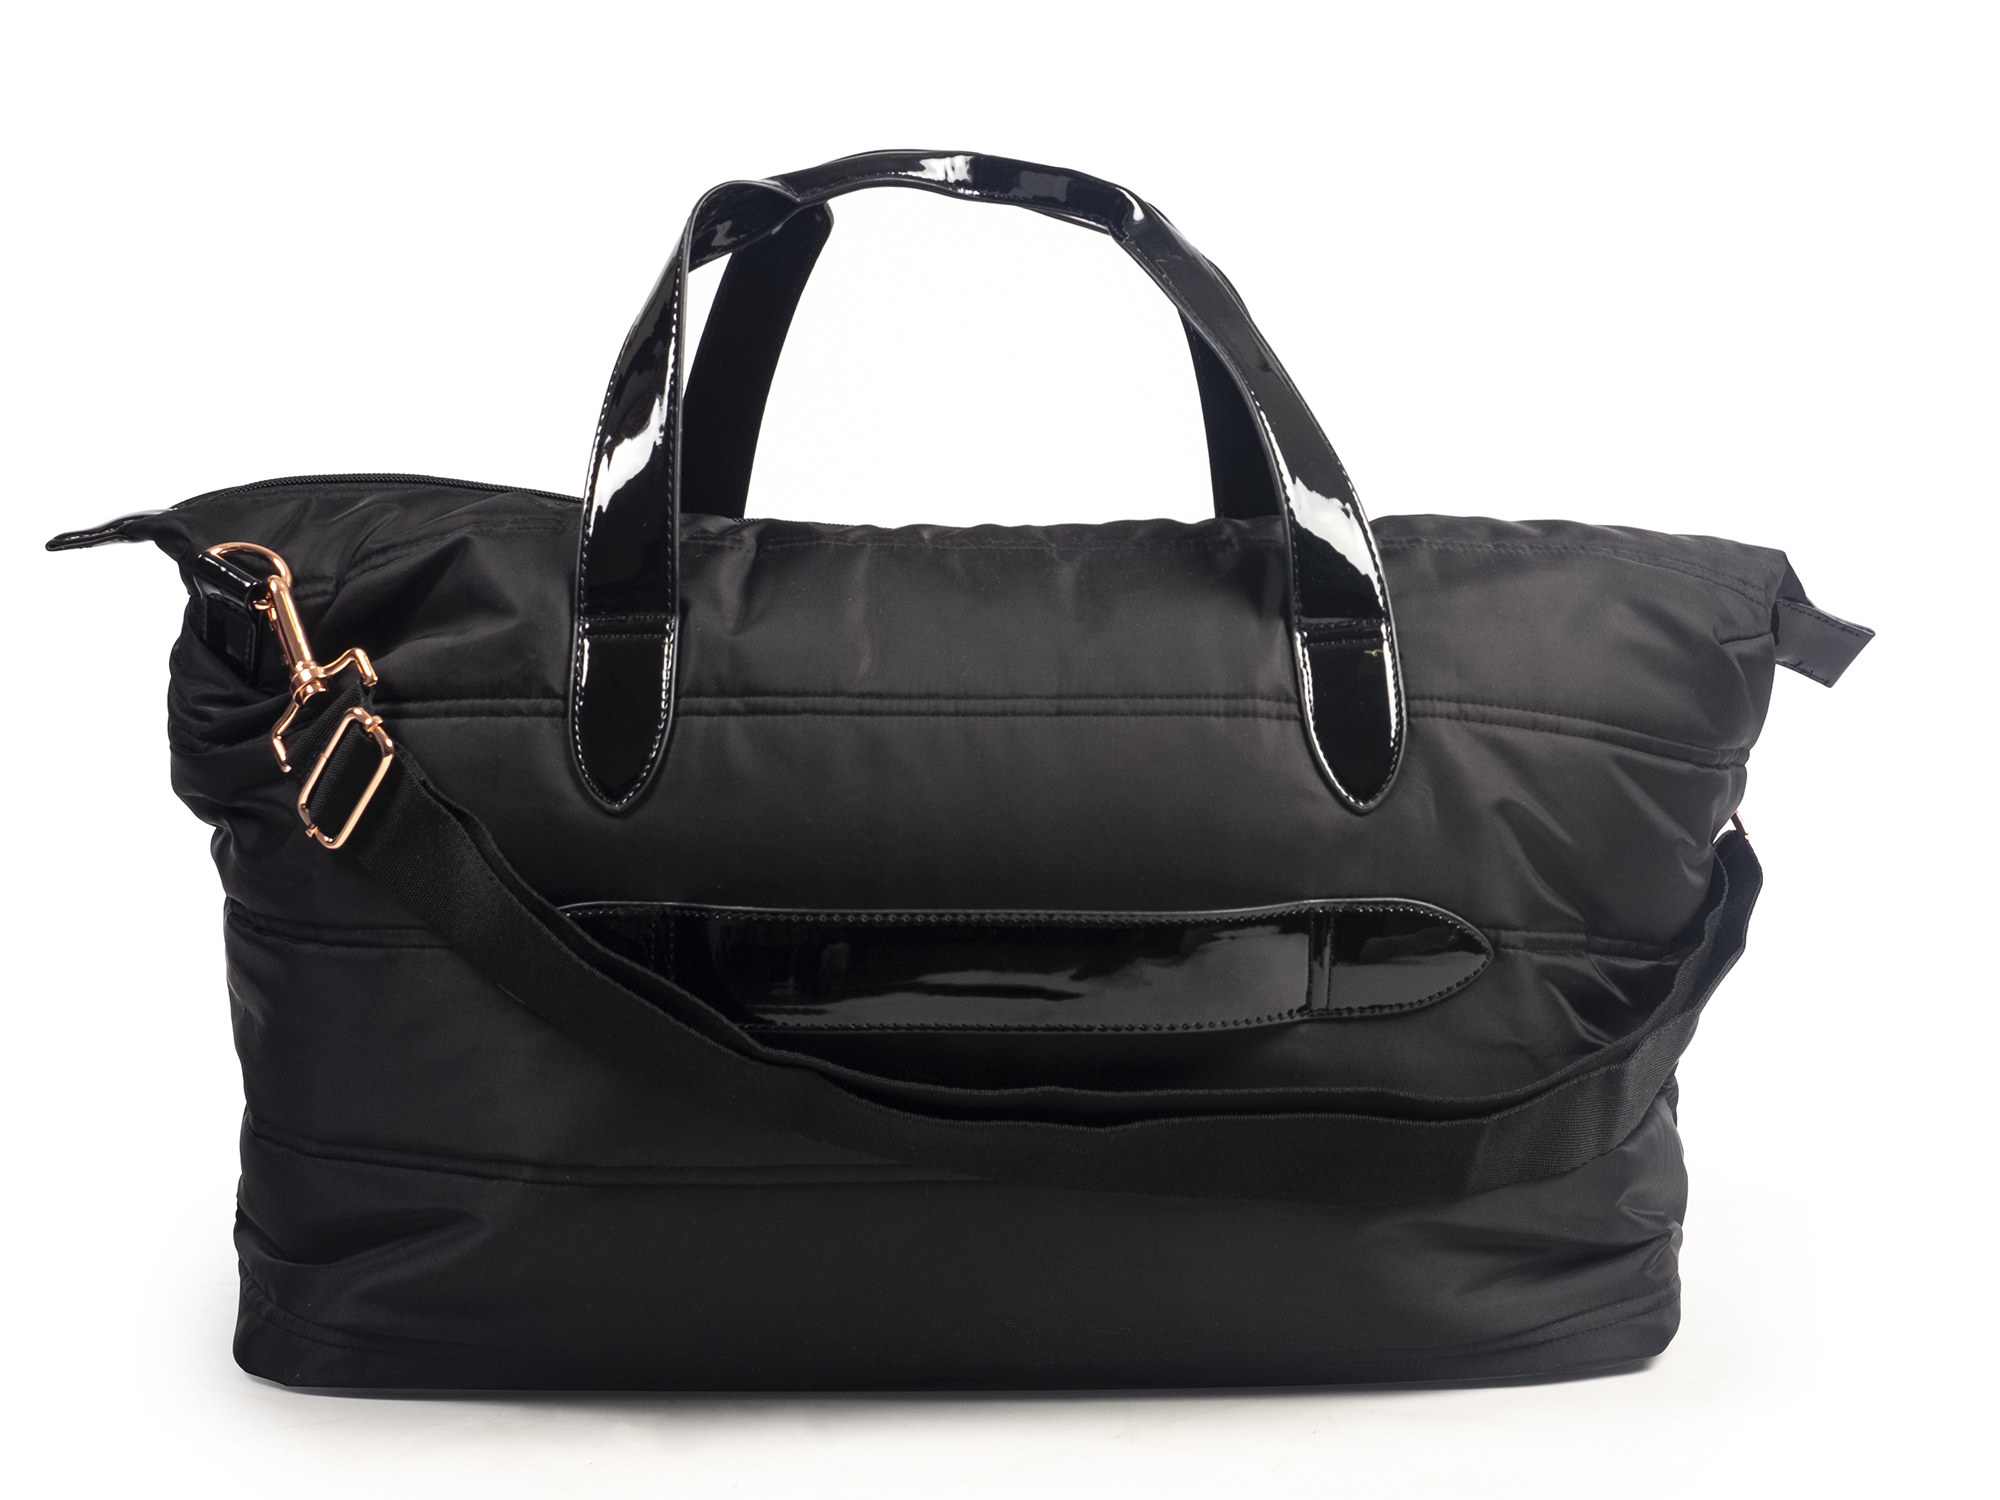 black weekender bag with a shoulder strap and trolley sleeve